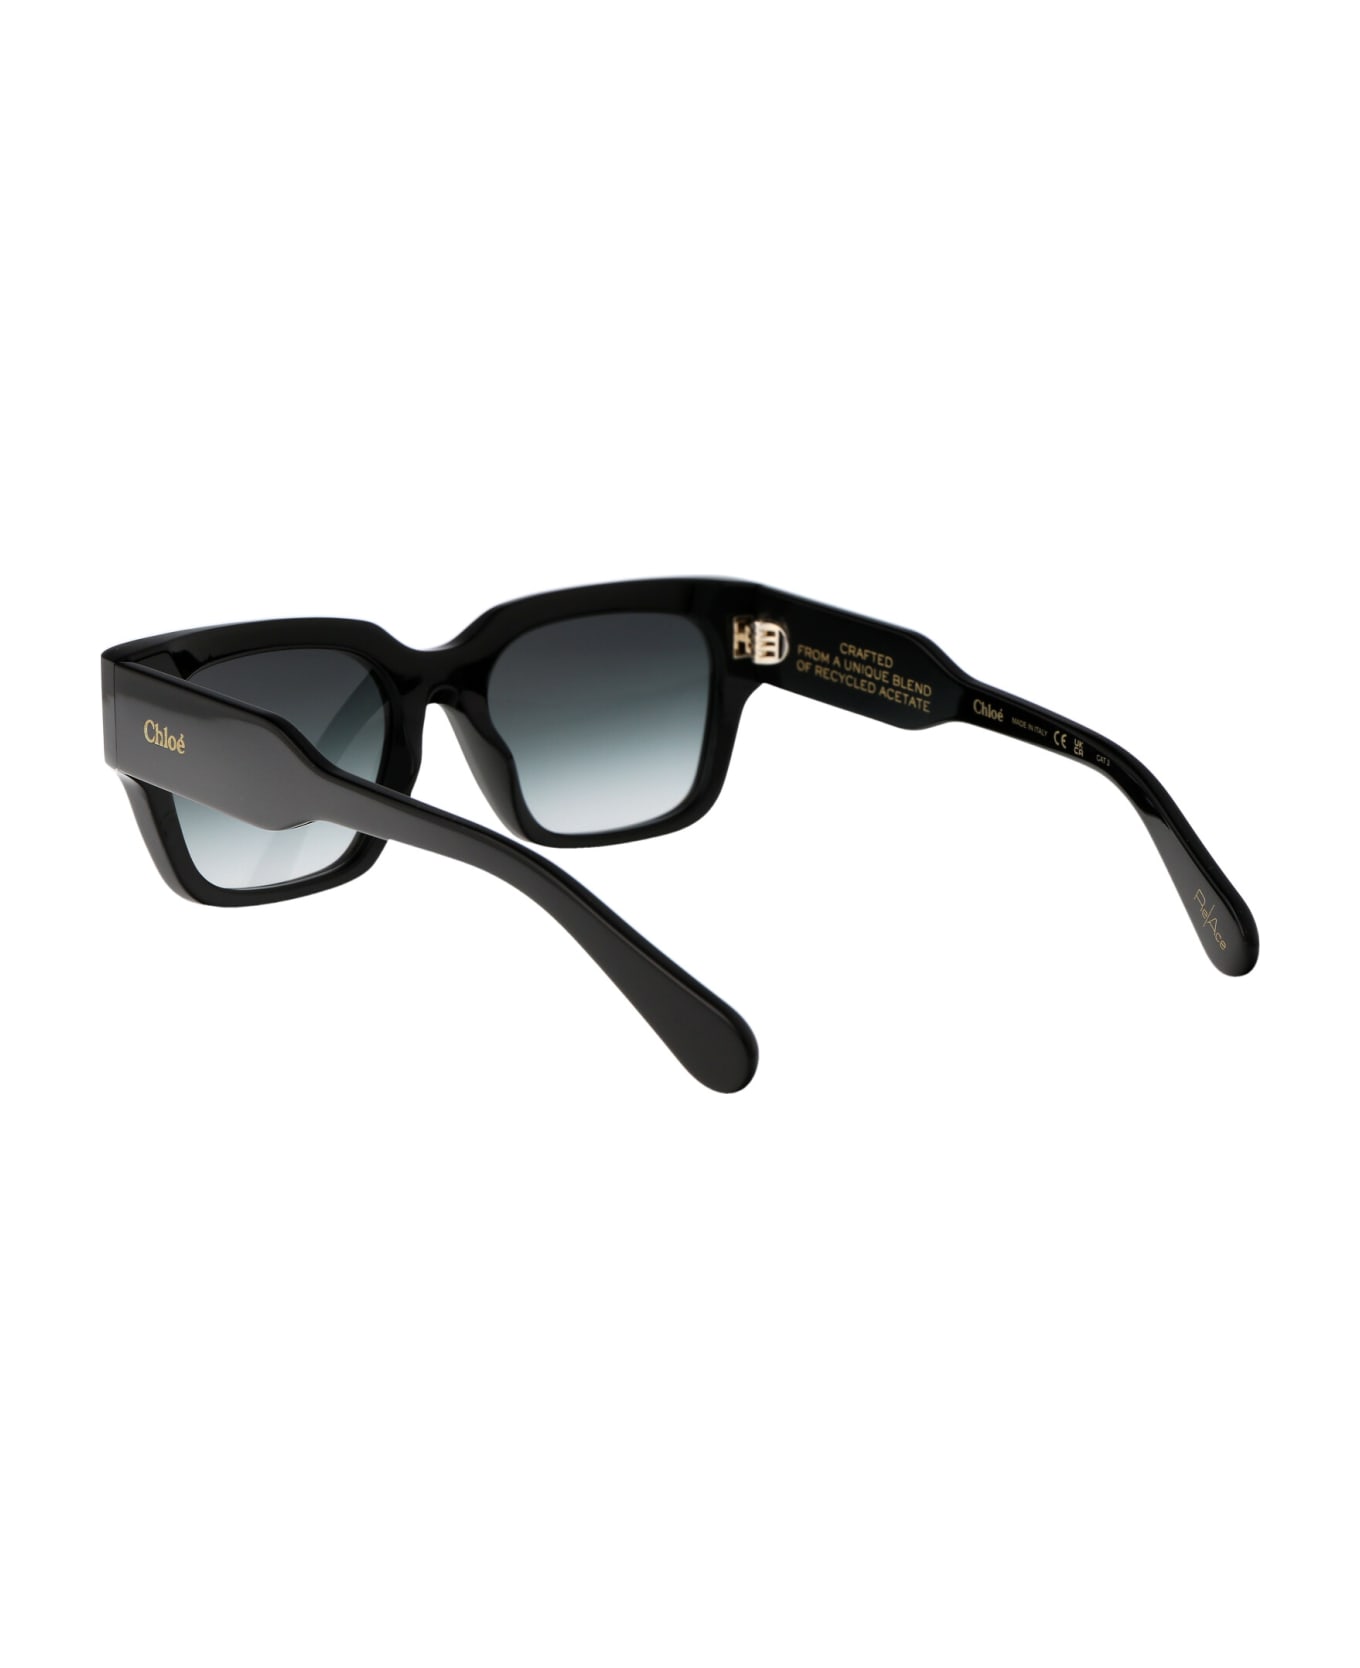 Chloé Eyewear Ch0190s Sunglasses - 001 BLACK BLACK GREY